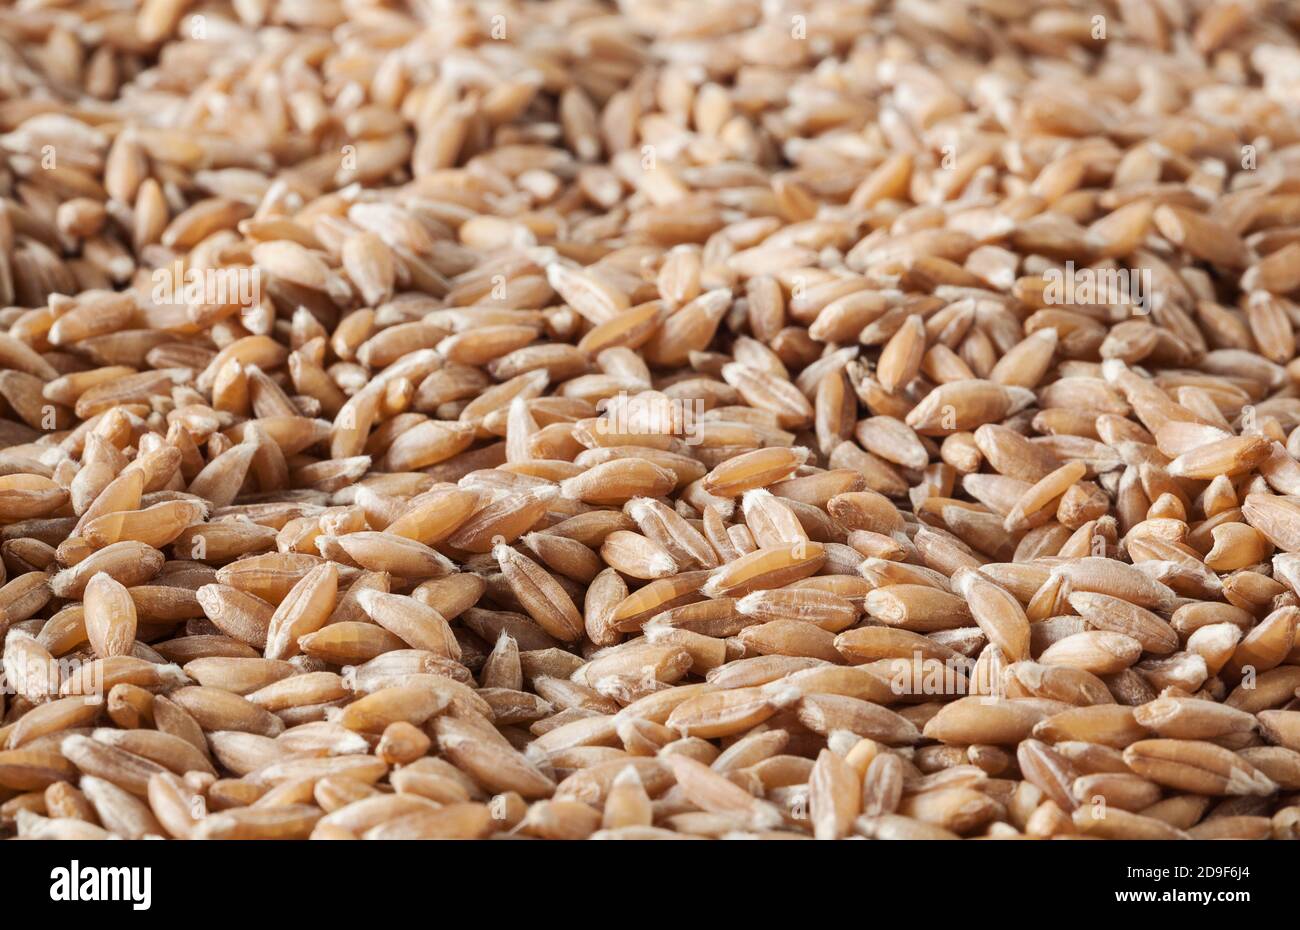 Uncooked spelt grains background Stock Photo